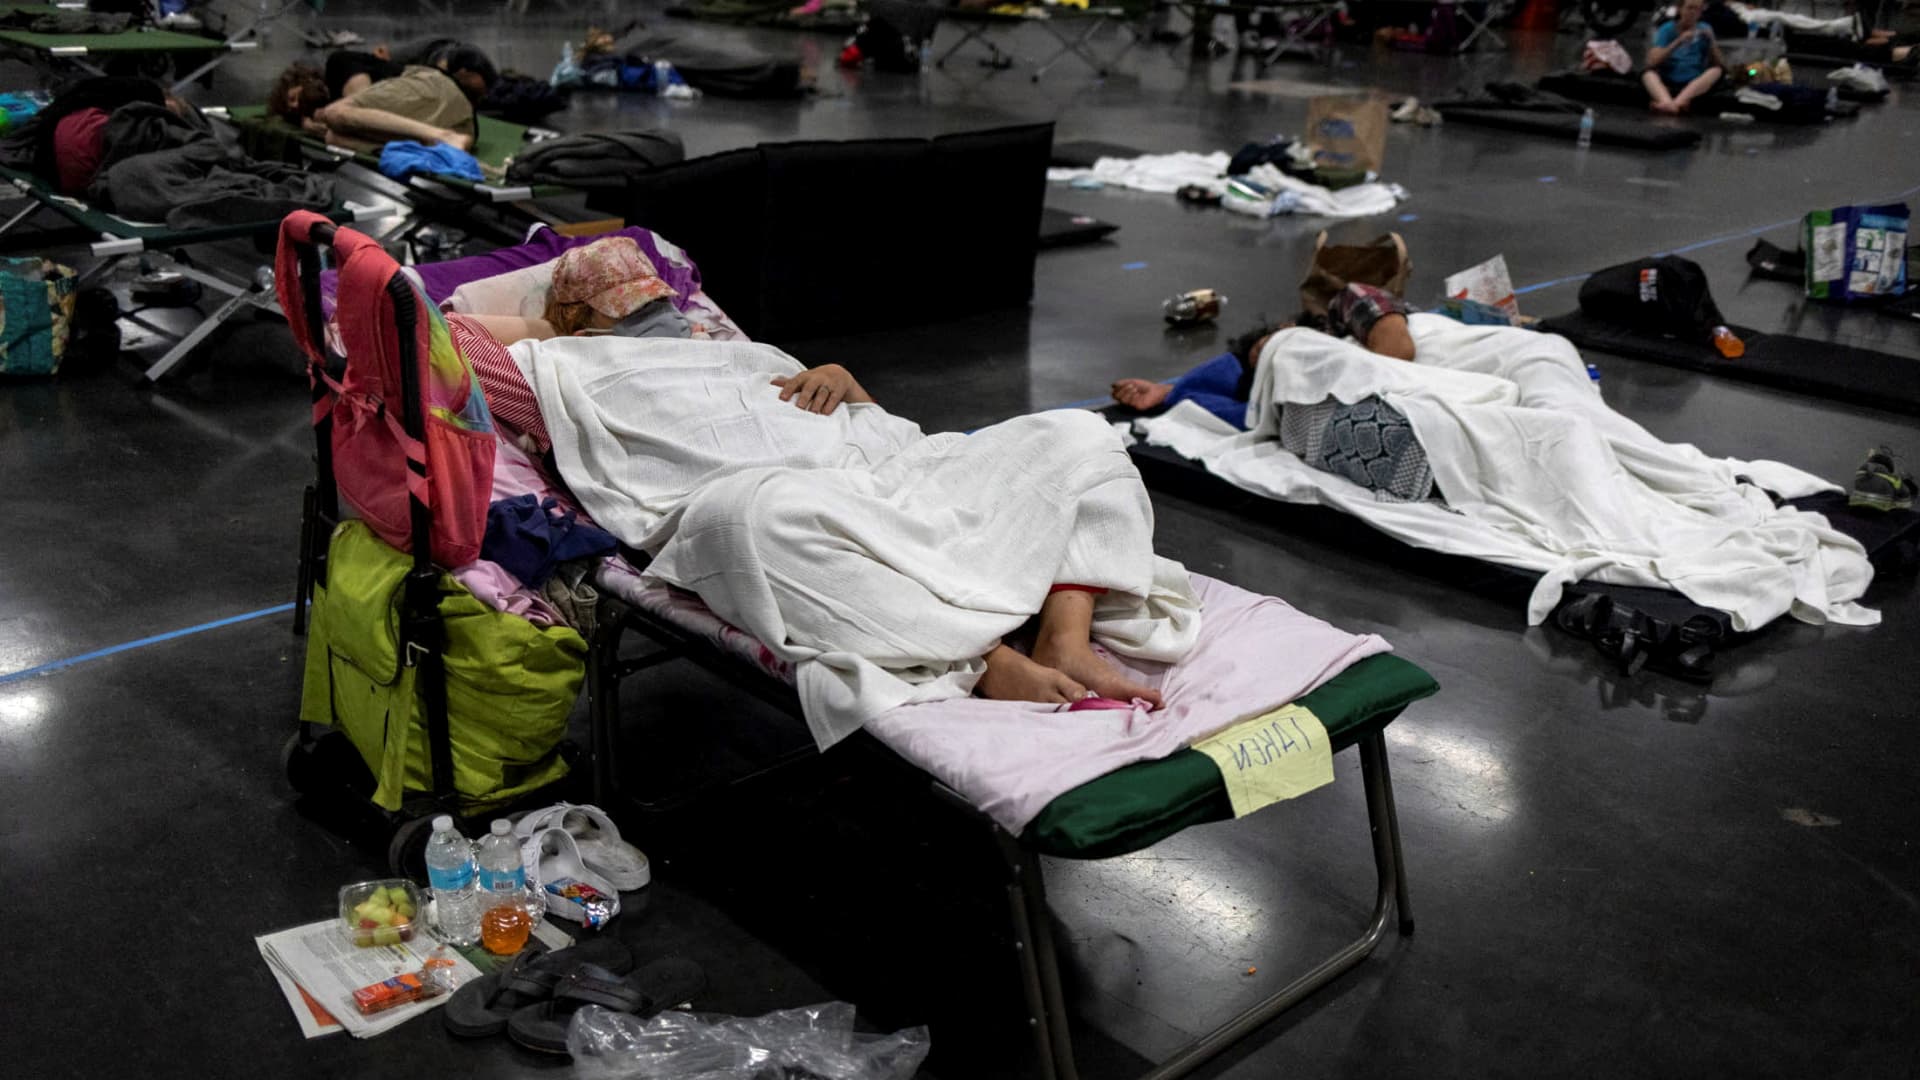 People sleep at a cooling shelter set up during an unprecedented heat wave in Portland, Oregon, U.S. June 27, 2021.